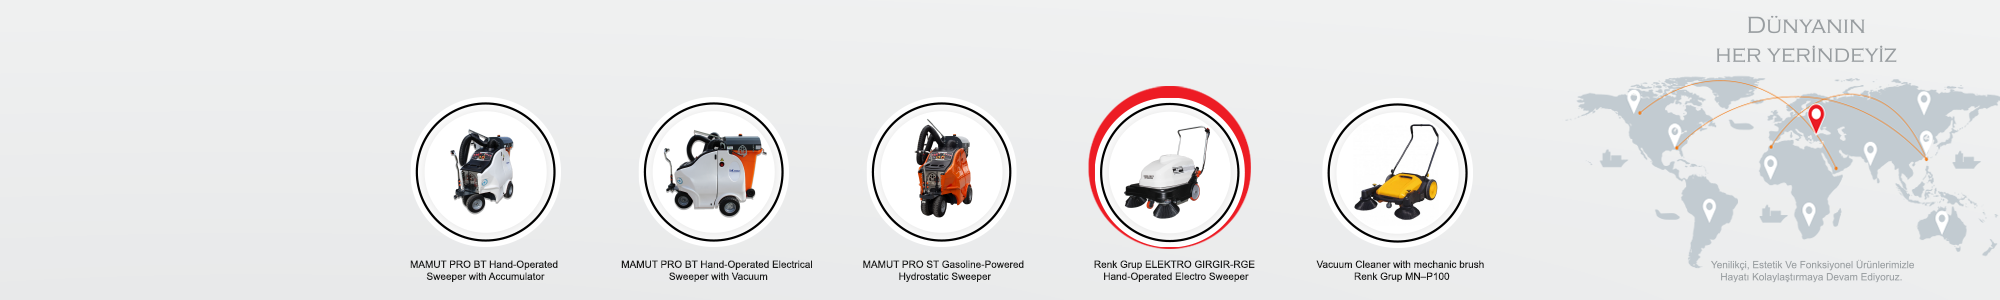 MAMUT PRO ST Gasoline-Powered Hydrostatic Sweeper